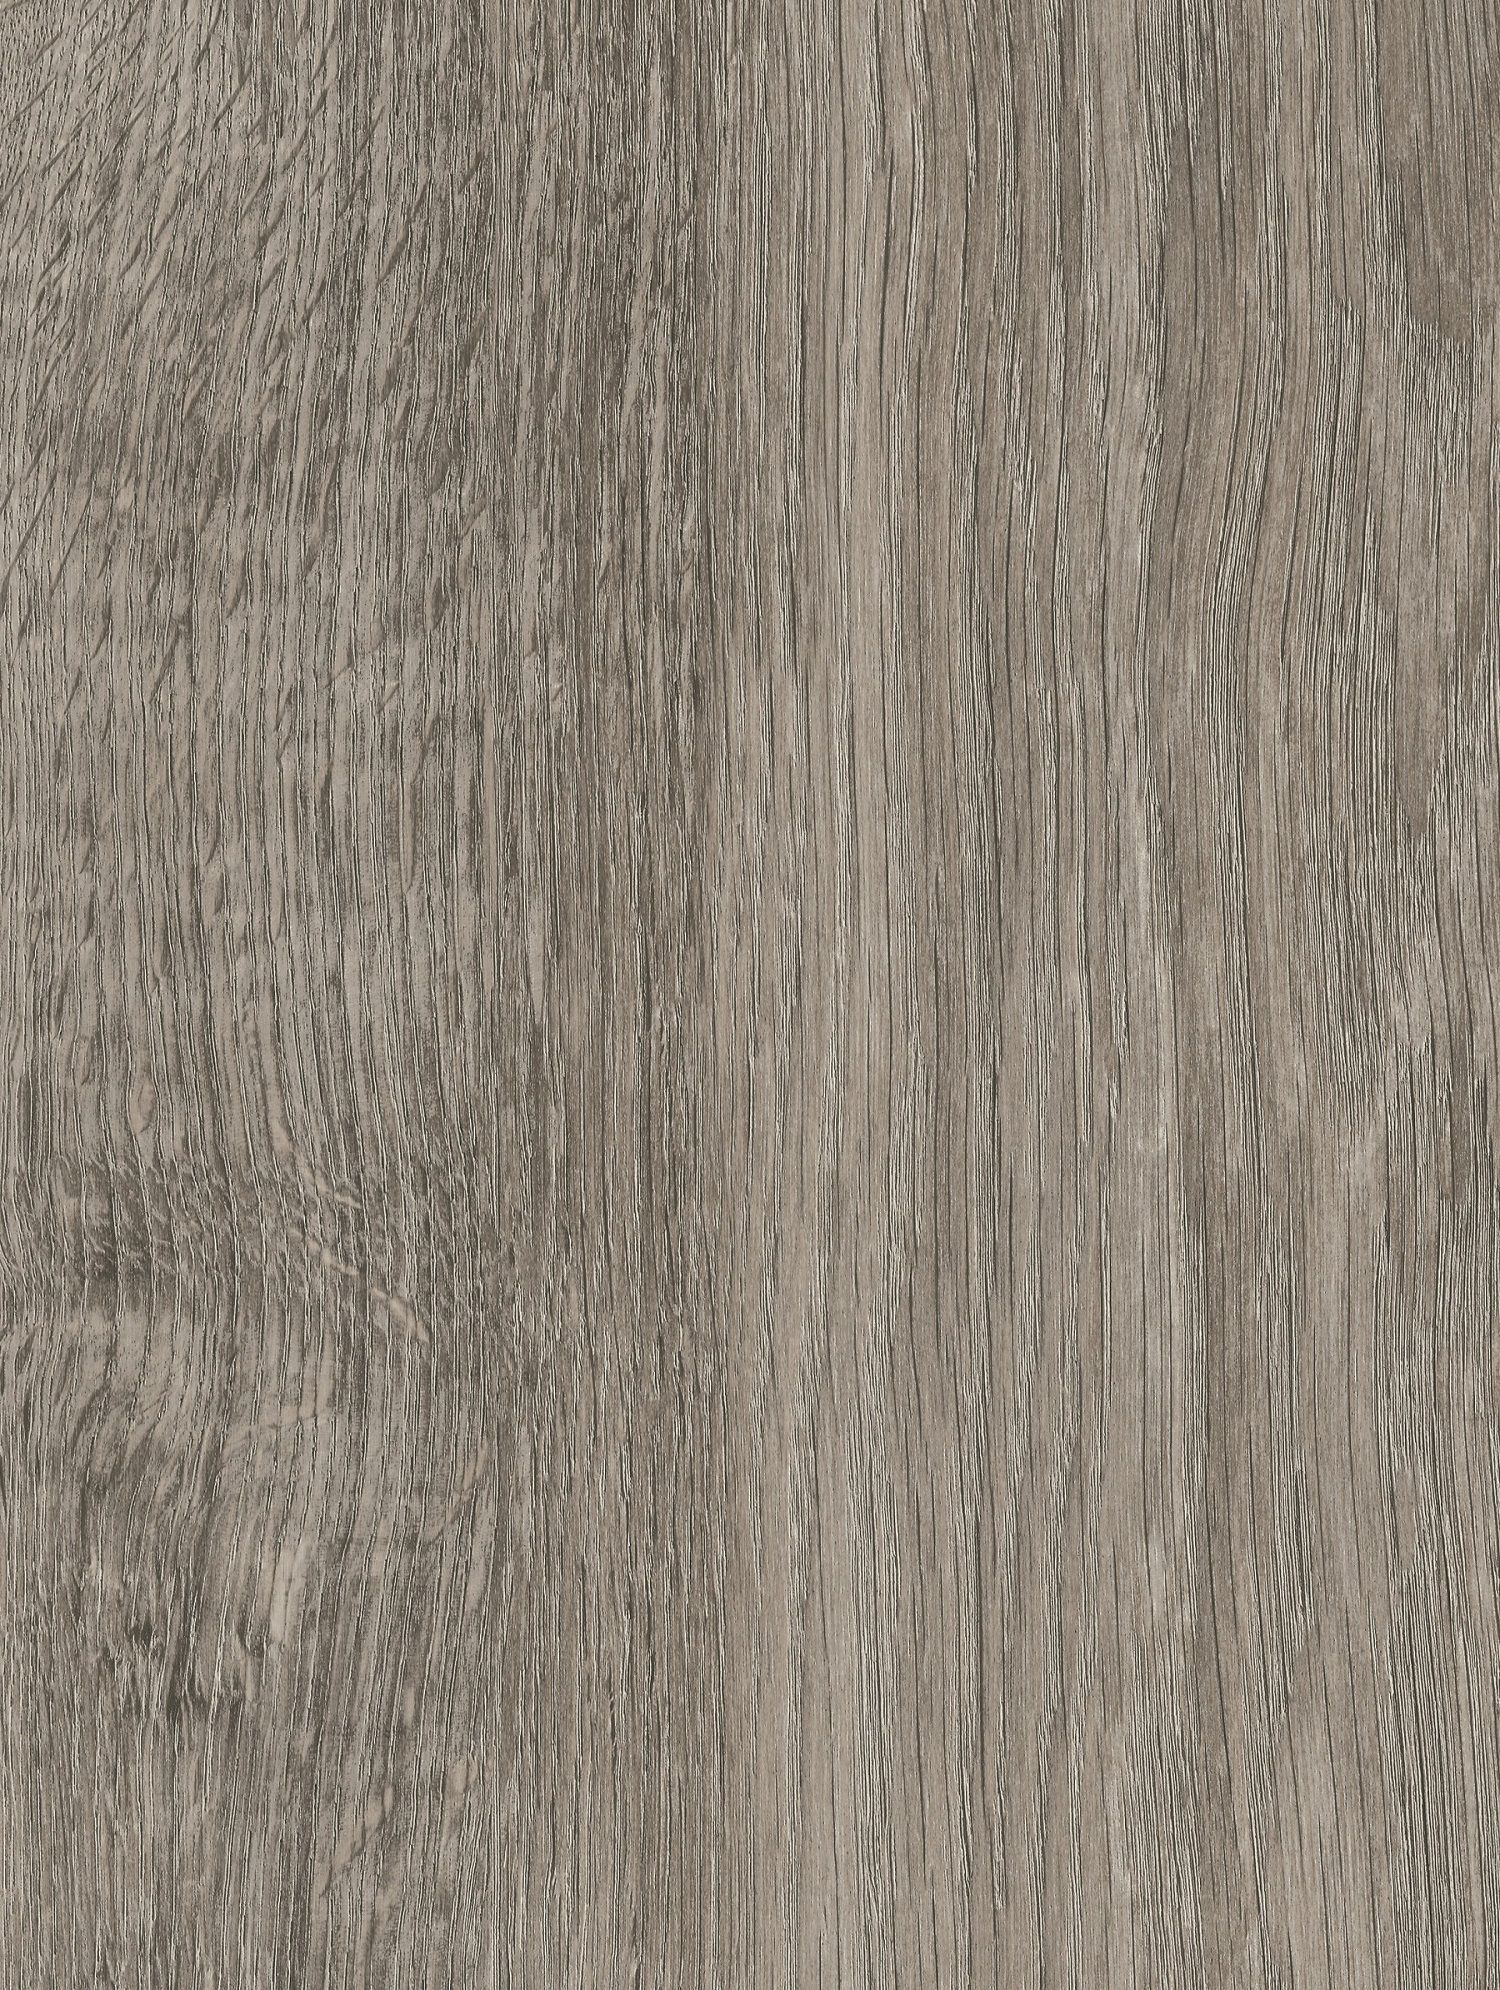 Elderwood Medium Grey Oak 12mm Laminate Flooring - Sample